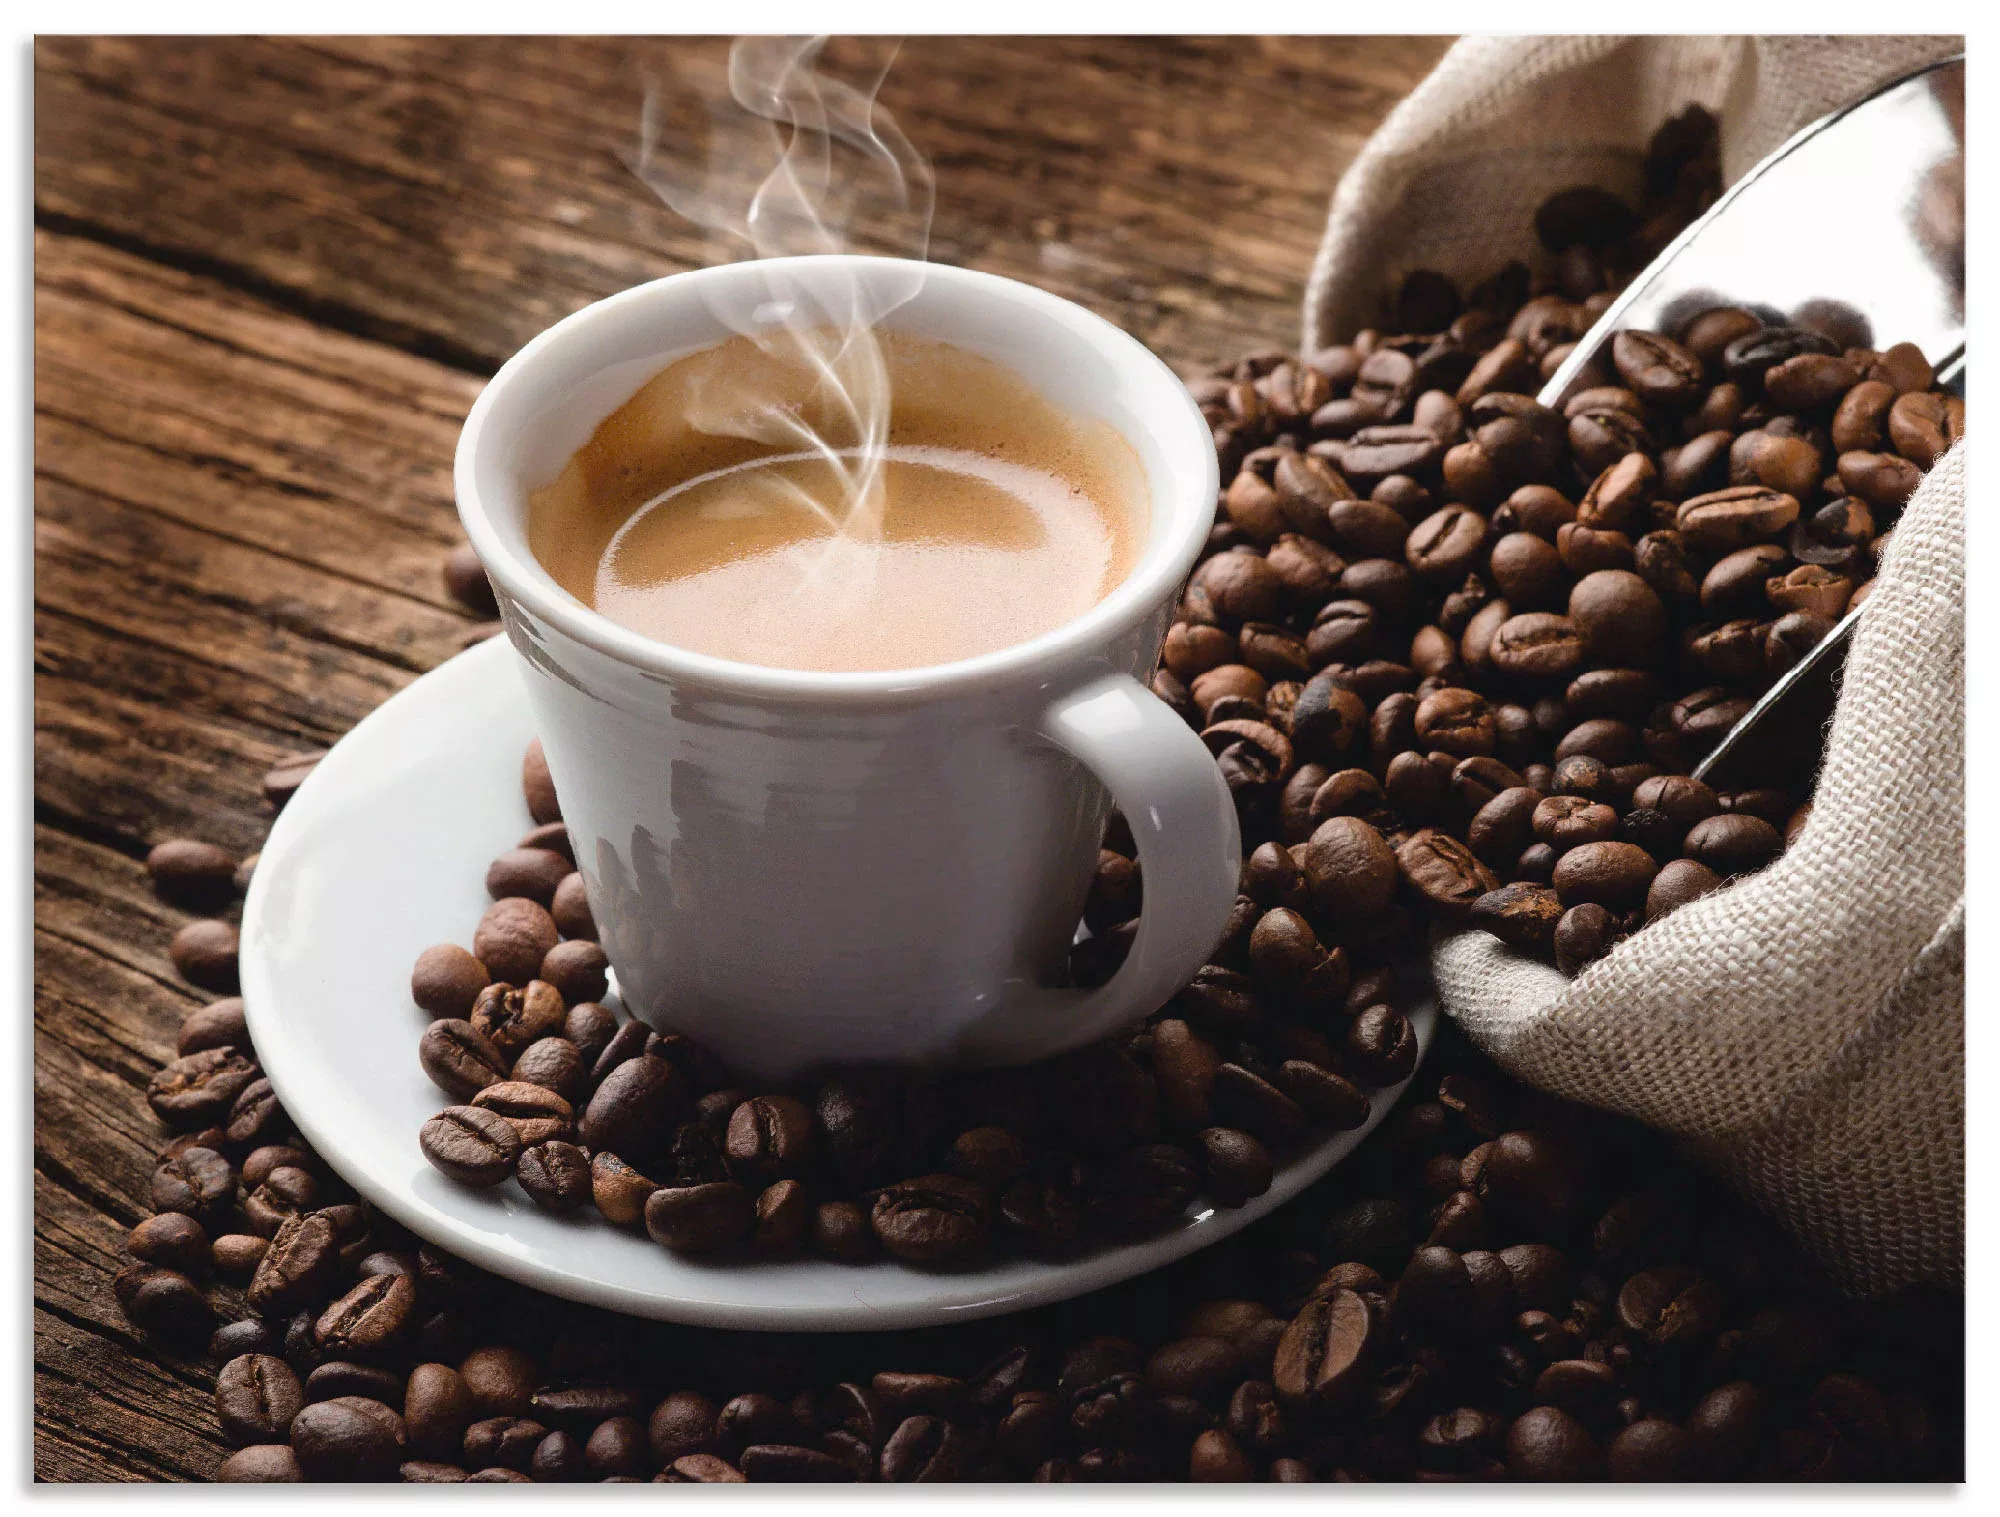 Artland Wandbild "Heißer Kaffee - dampfender Kaffee", Getränke, (1 St.), al günstig online kaufen